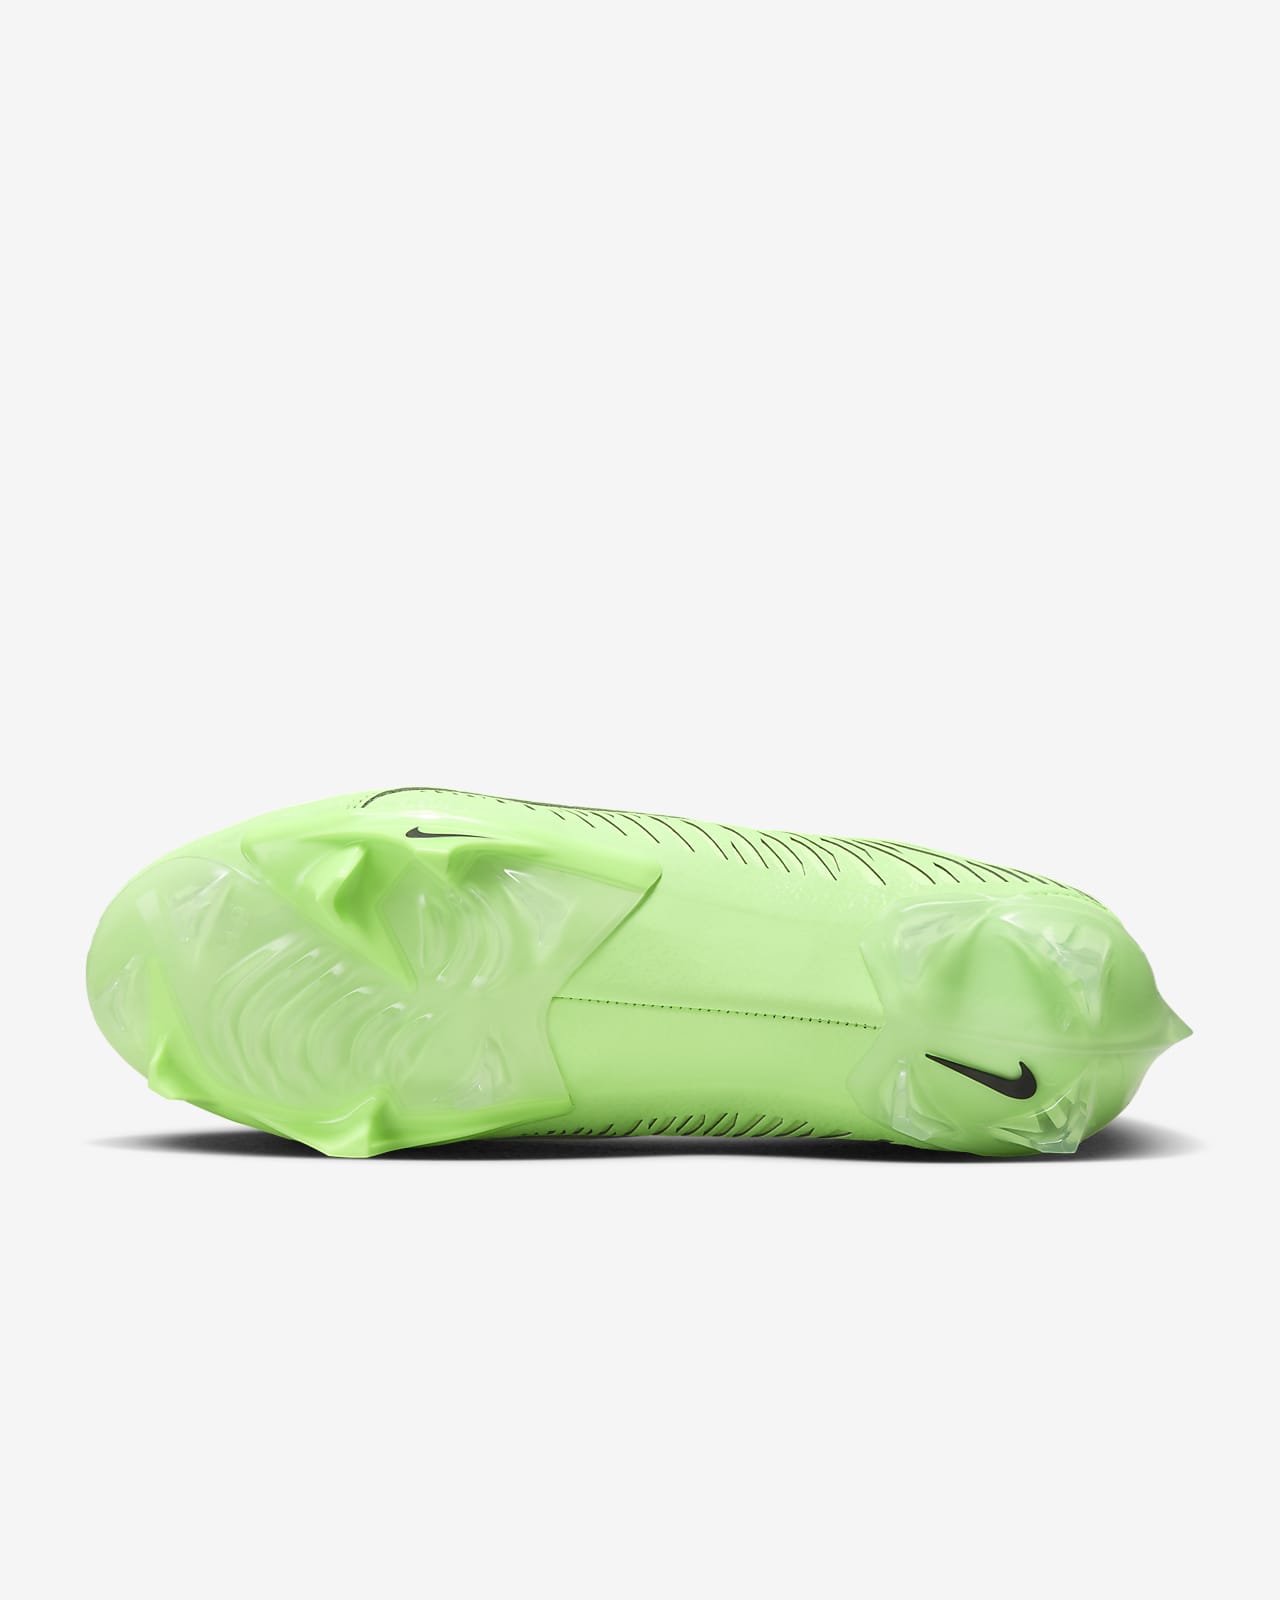 Custom Nike vapor 360 edge cleats